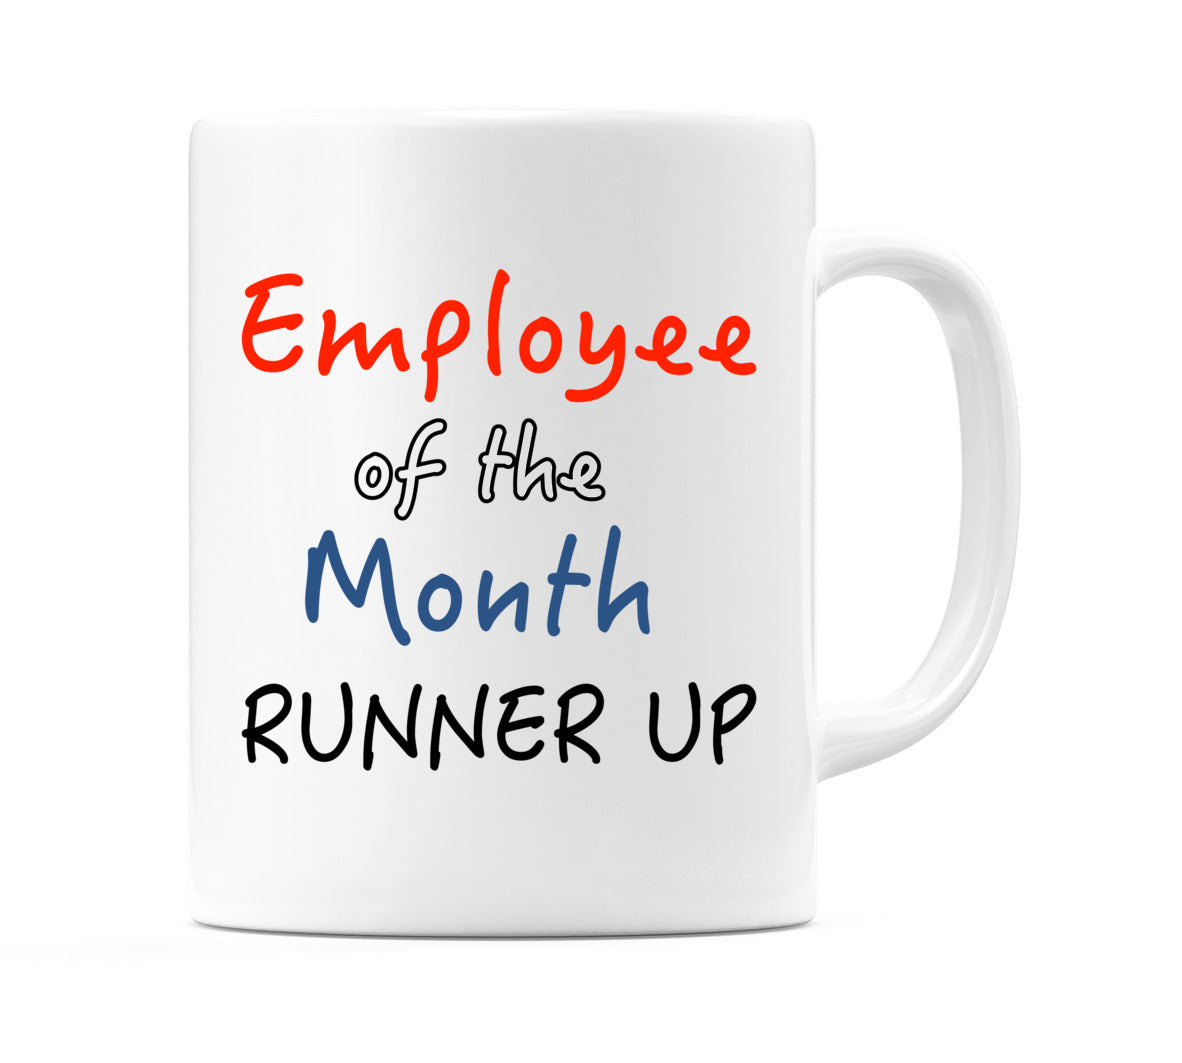 Employee of the Month RUNNER UP Mug